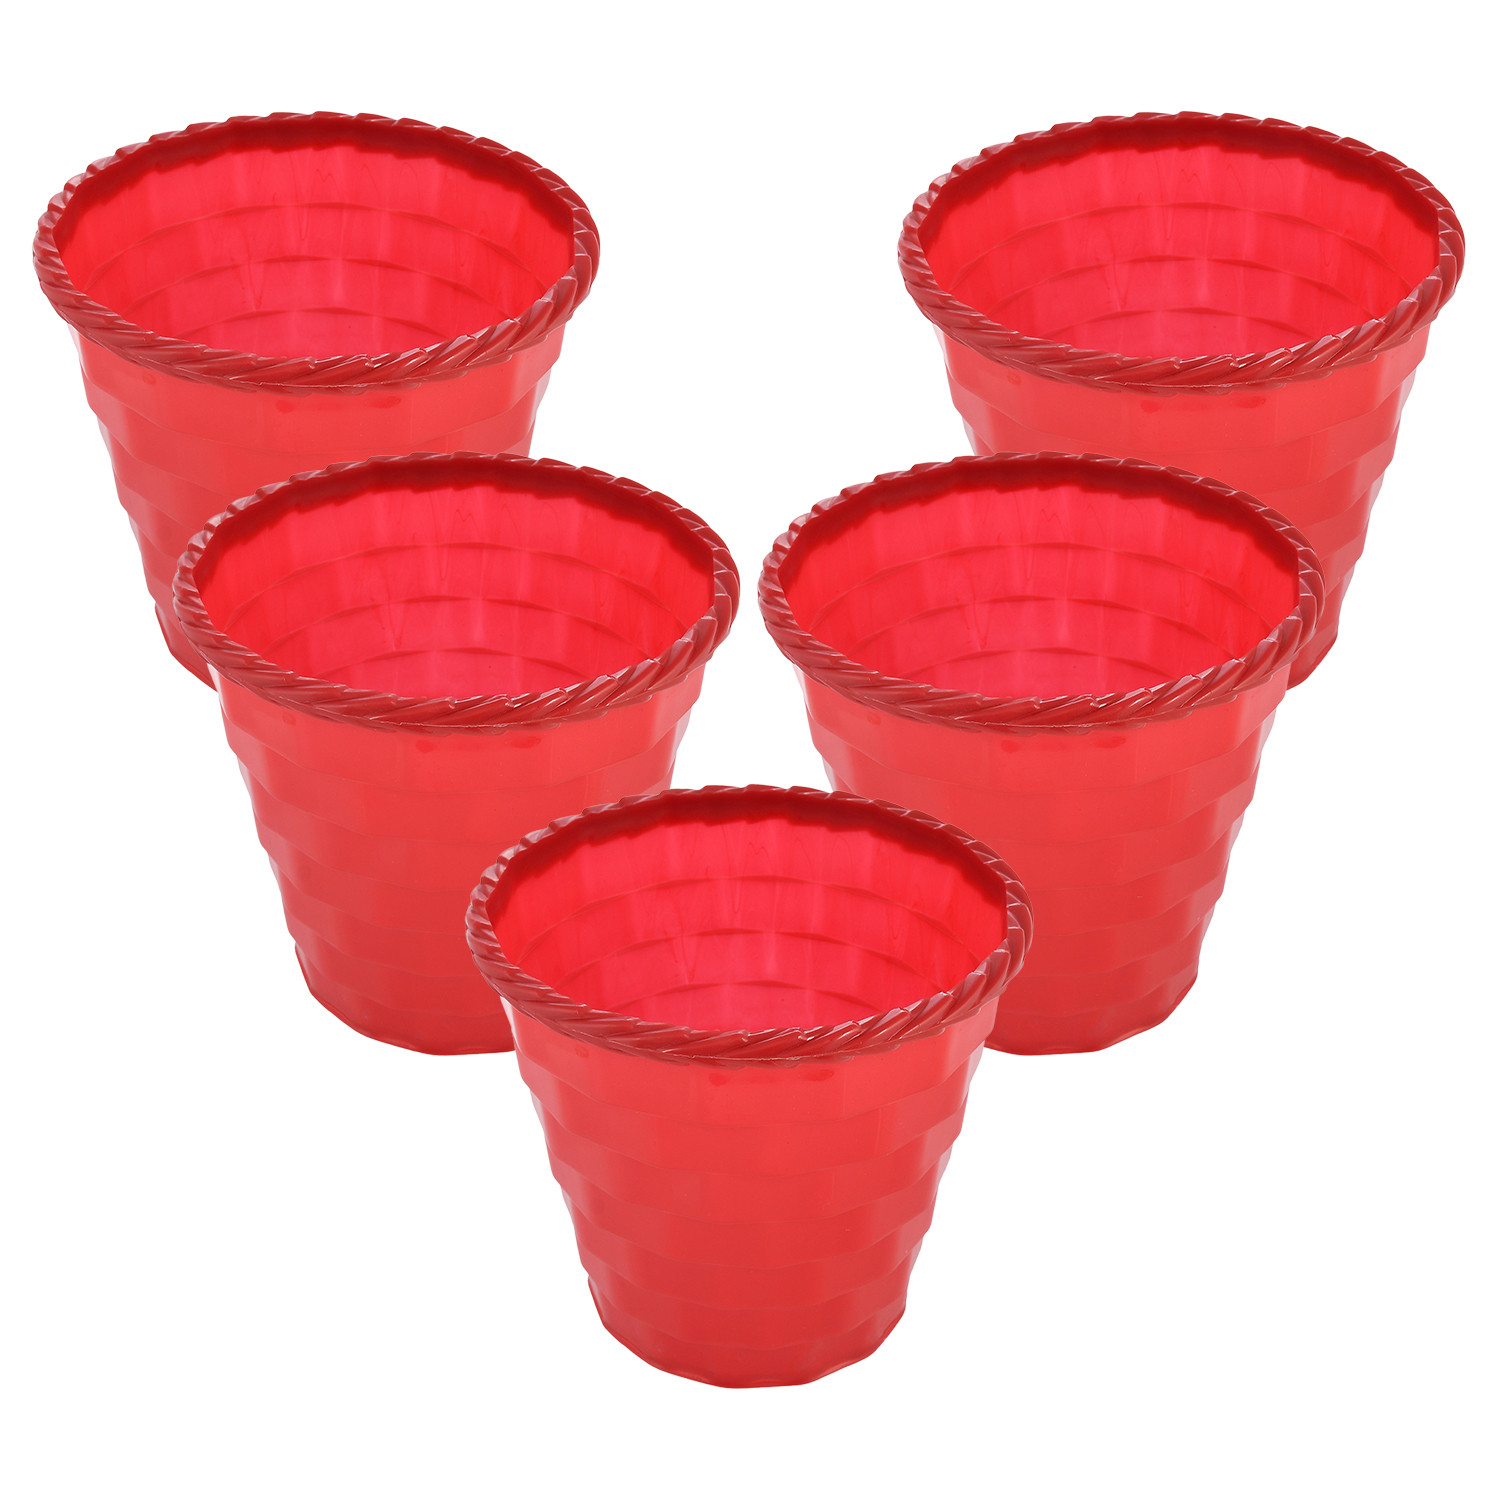 Kuber Industries Brick Flower Pot|Durable Plastic Flower Pots|Planters for Home Décor|Garden|Living Room|Balcony|6 Inch|(Red)